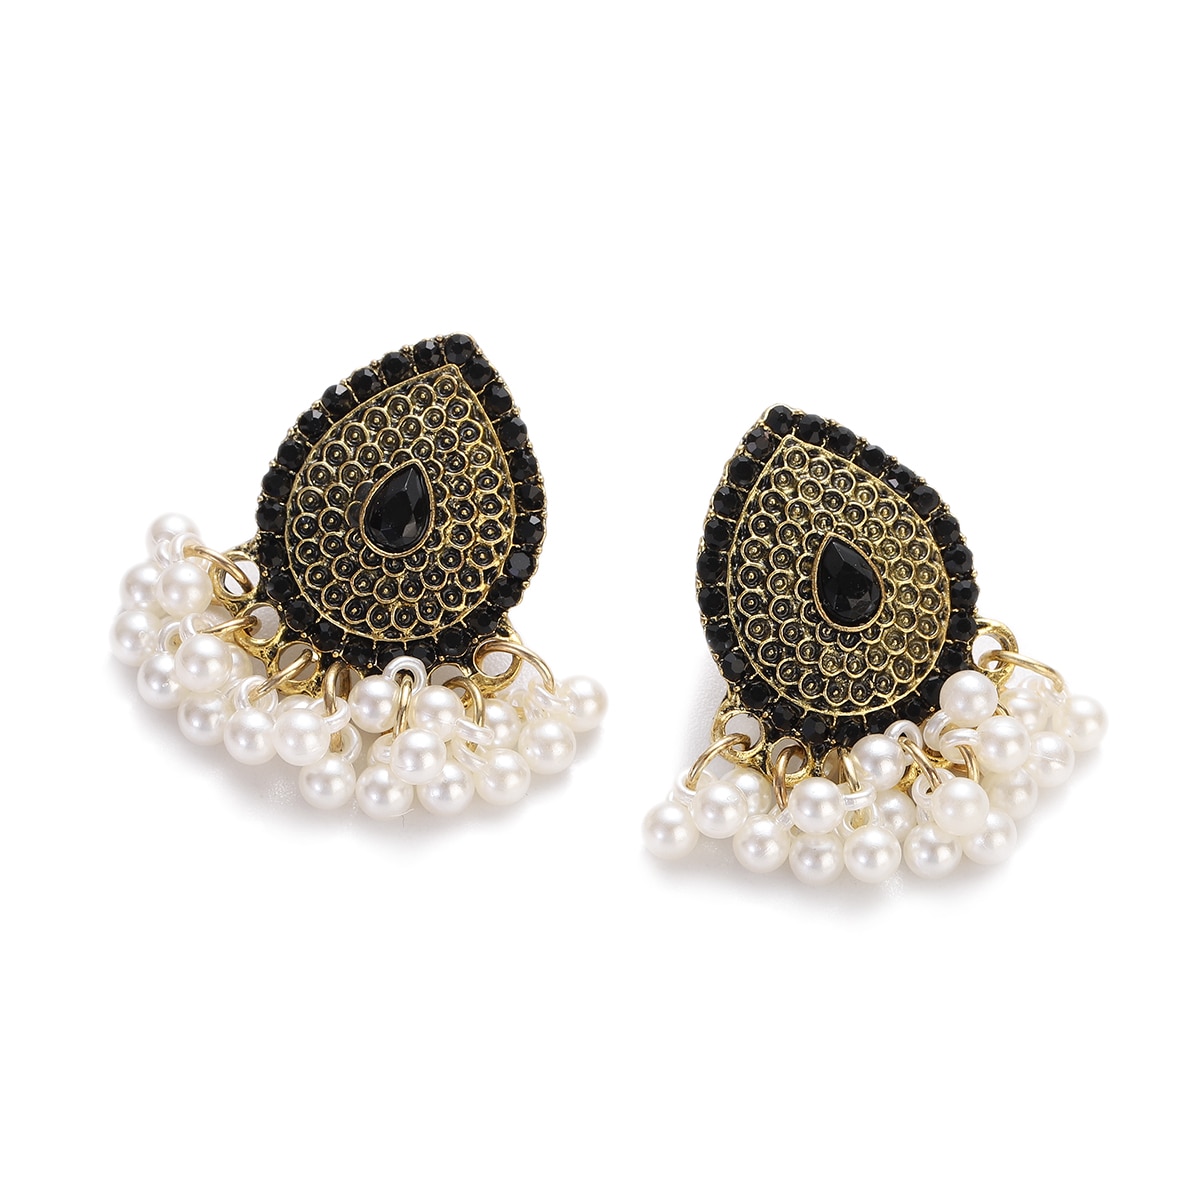 Luxury-White-CZ-Water-Drop-Earrings-For-Women-Ethnic-Vintage-Bohemian-Gold-Color-Statement-Earrings-1005004700736114-5